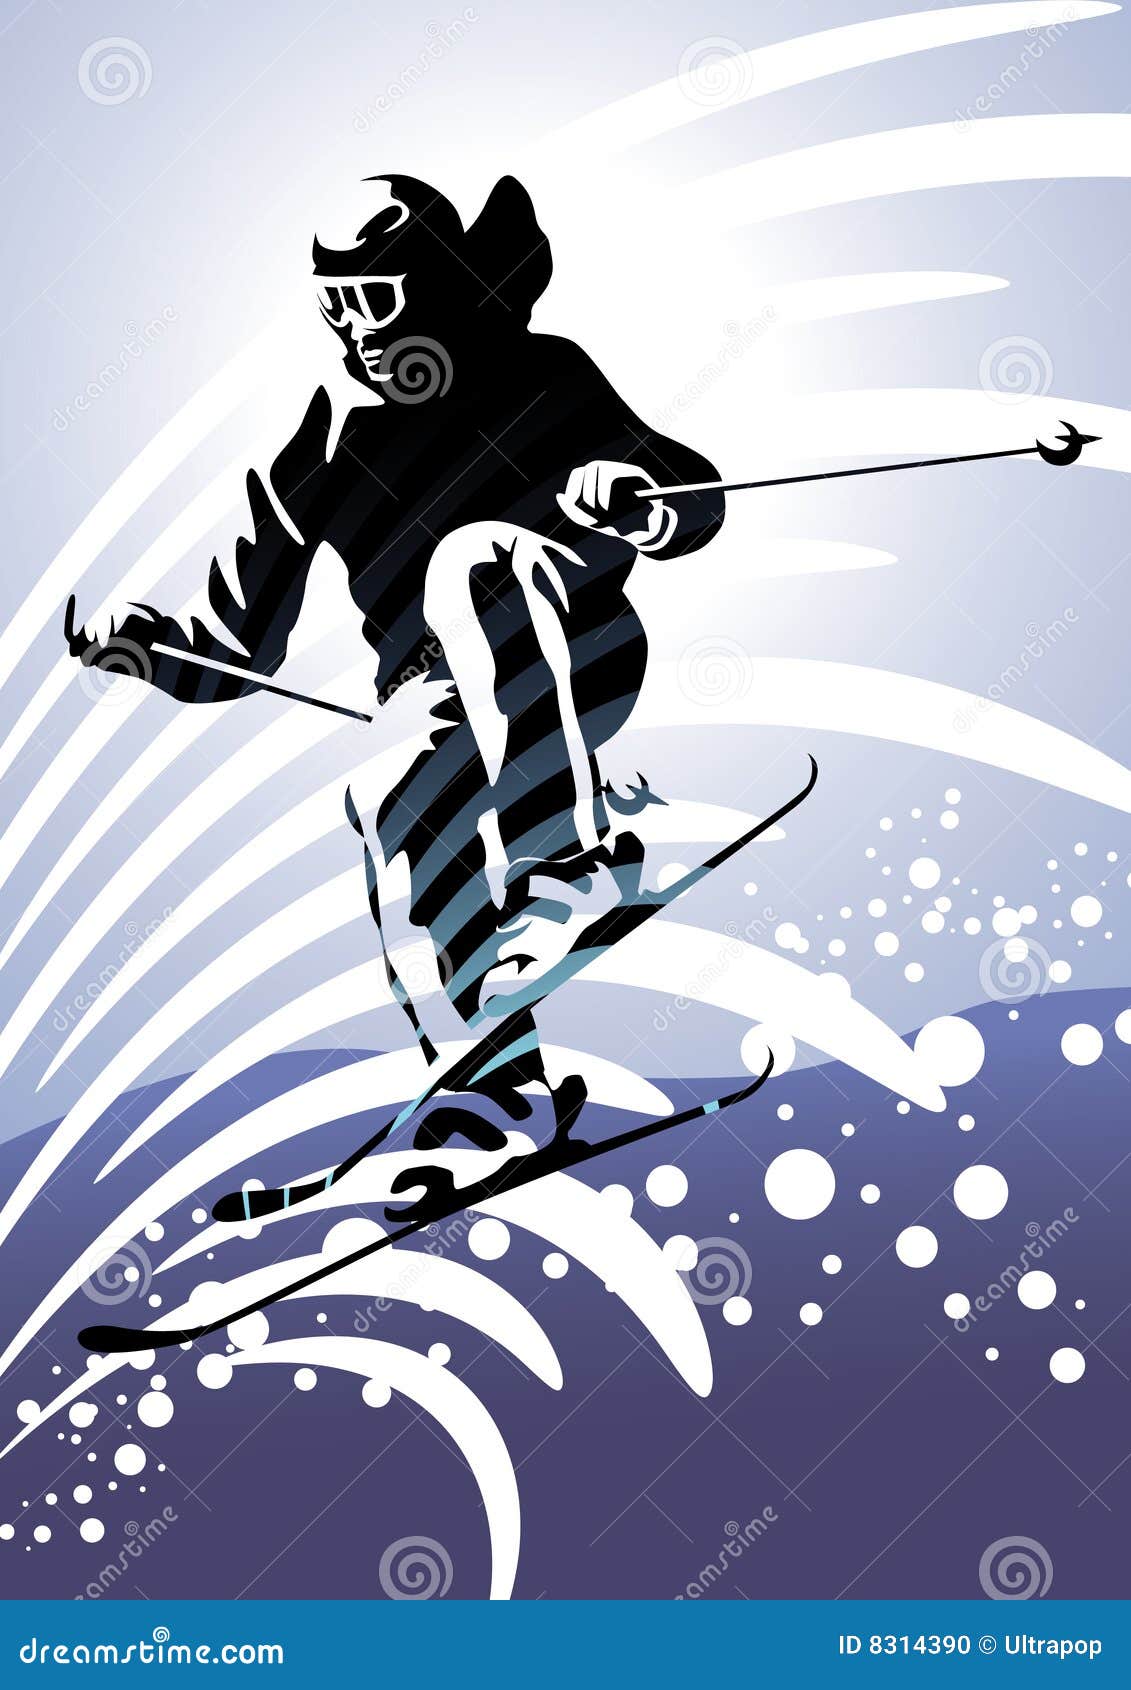 winter sports #2: downhill skiing